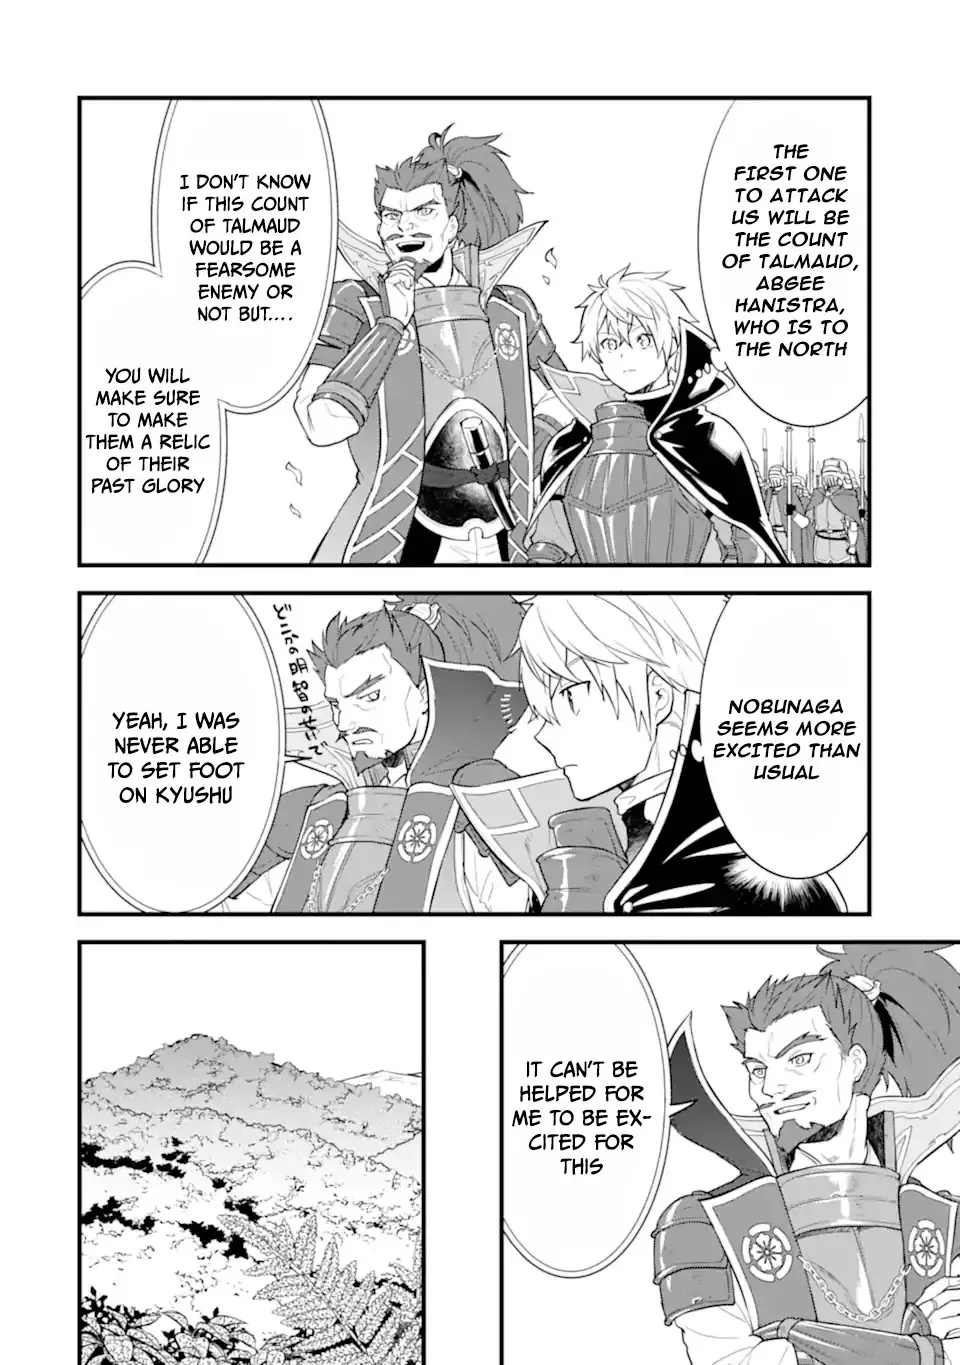 Mysterious Job Called Oda Nobunaga - 37 page 5-6f772136